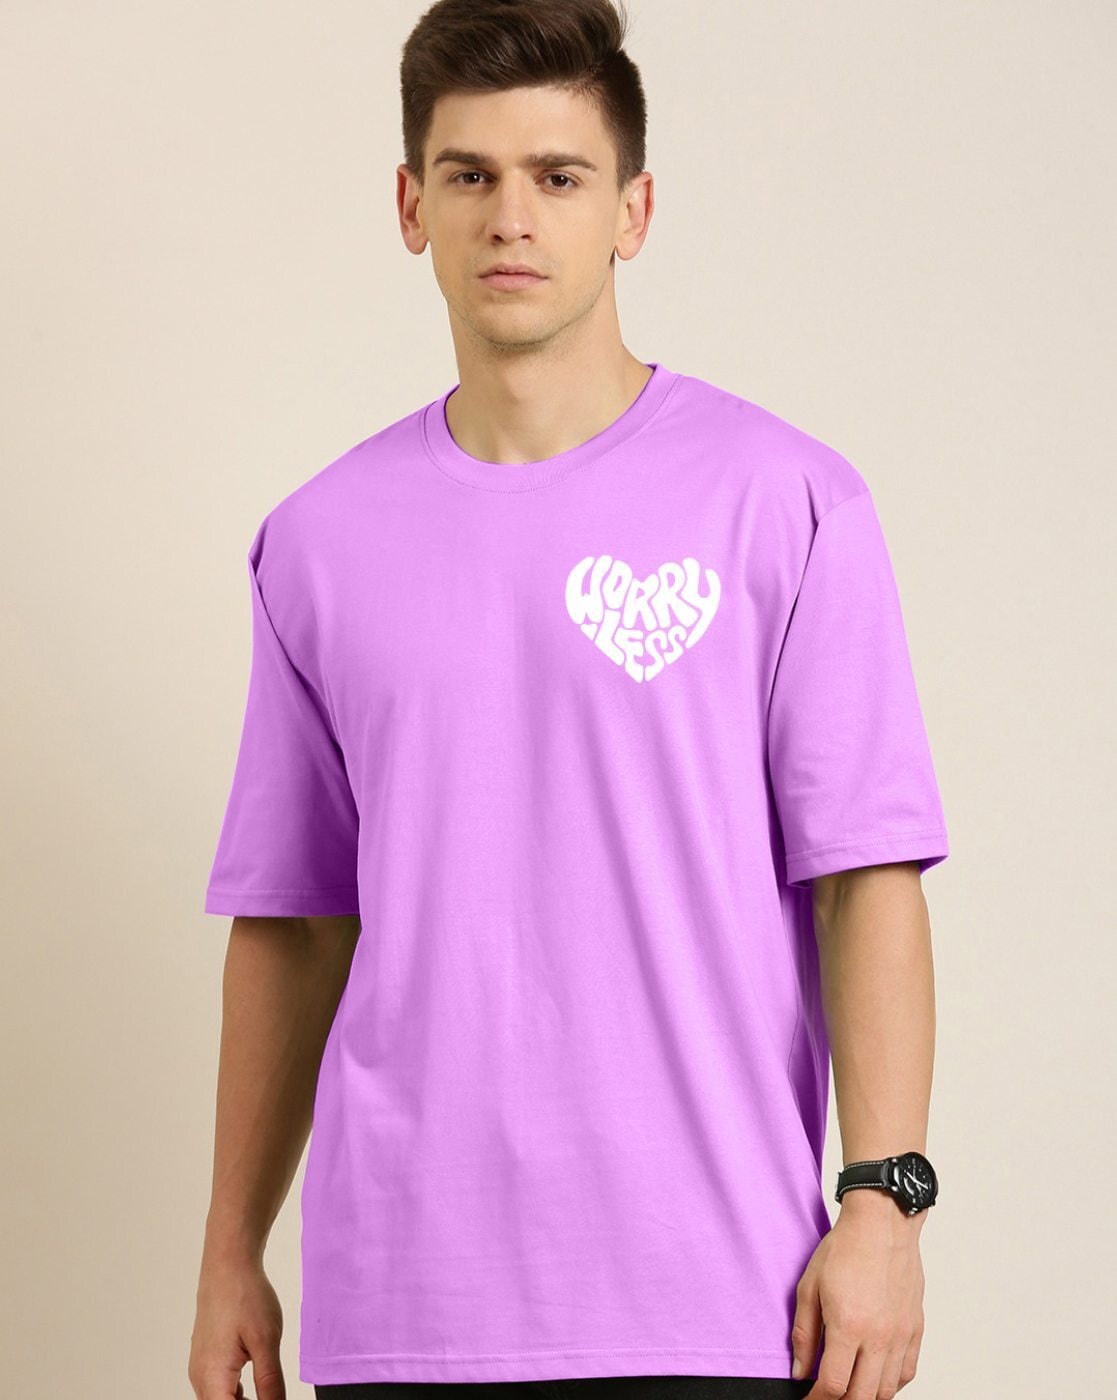 Mens T Shirts Purple Brand Mens Printing Shirt For Men Women High Street T  Shirt Sculpture Pattern Top Tee From Blueberry12, $20.21